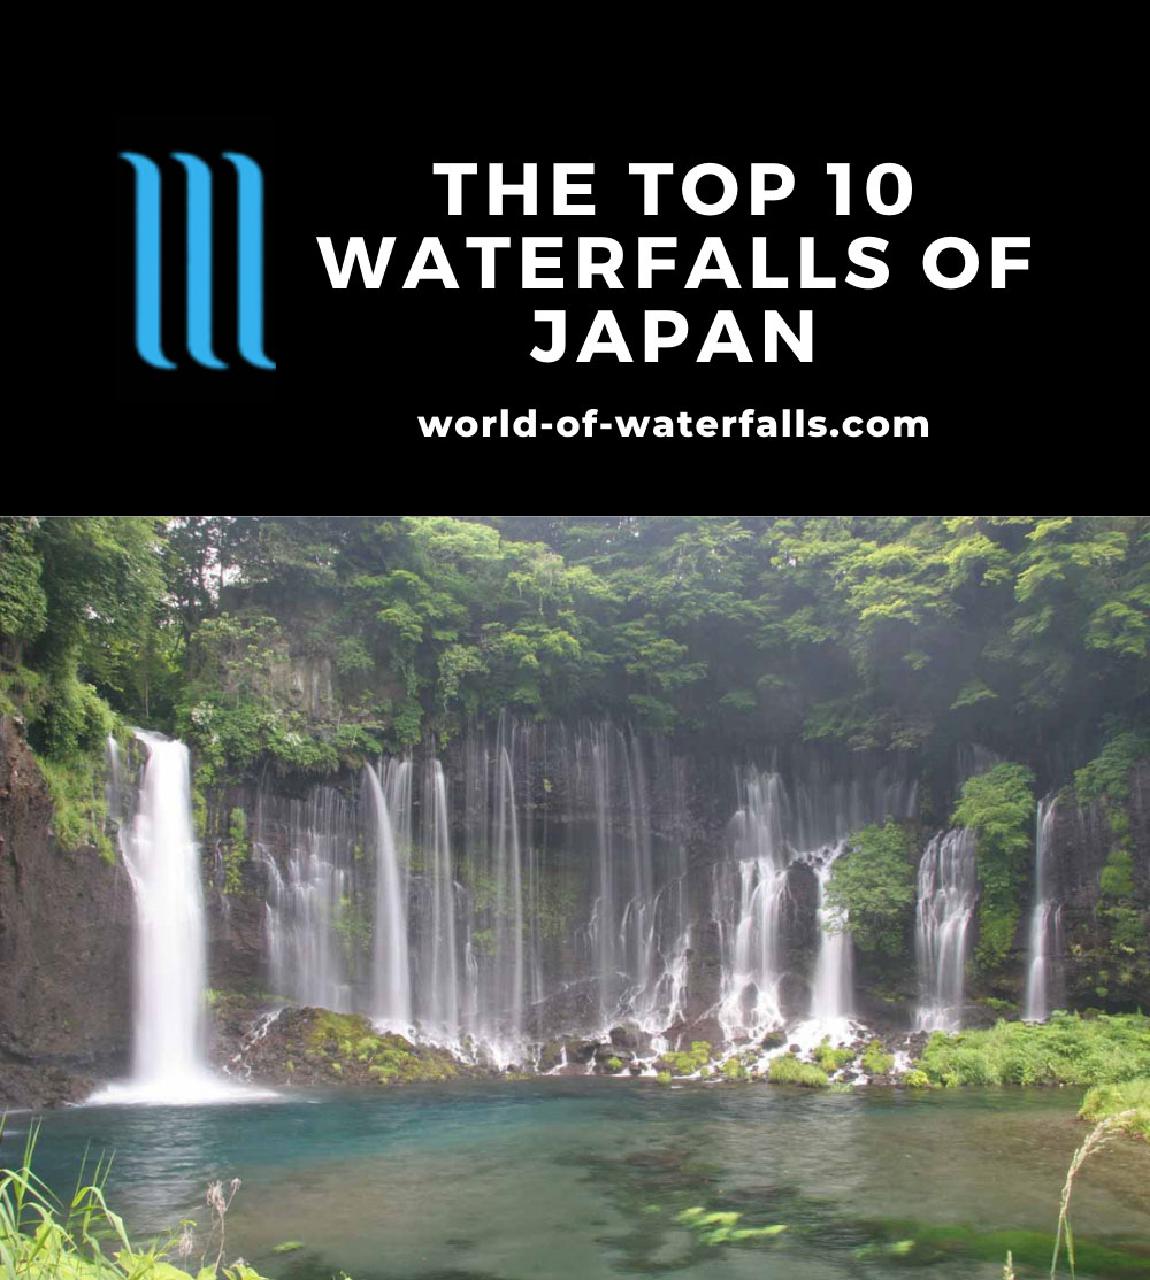 The Top 10 Waterfalls of Japan